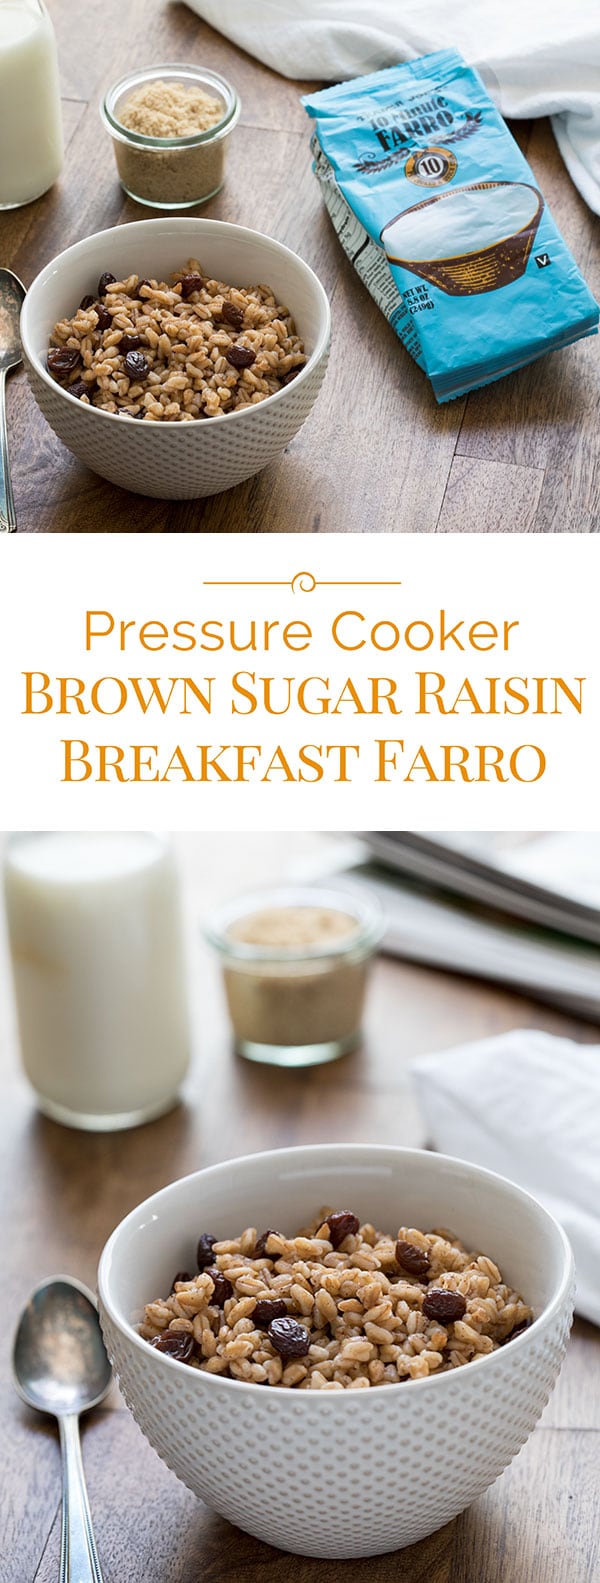 Pressure-Cooker-Brown-Sugar-Raisin-Breakfast-Farro-Collage-Pressure-Cooking-Today